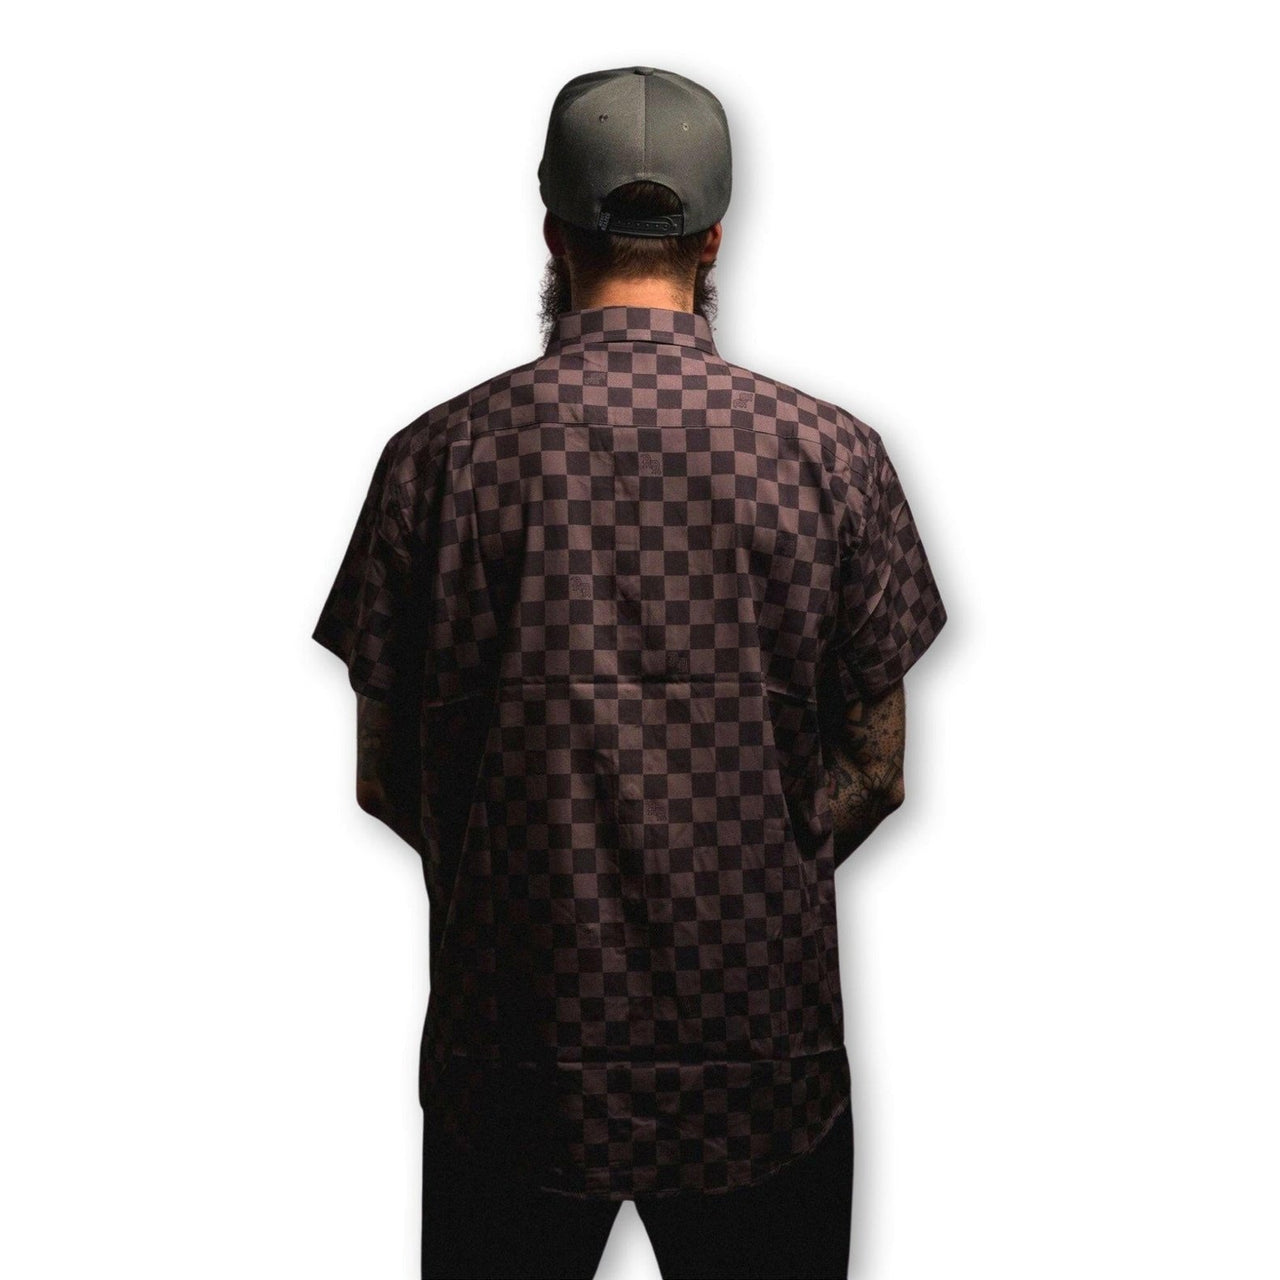 Chocolate Checkered Shirt - Rebel Reaper Clothing Company Button Up Shirt Men's